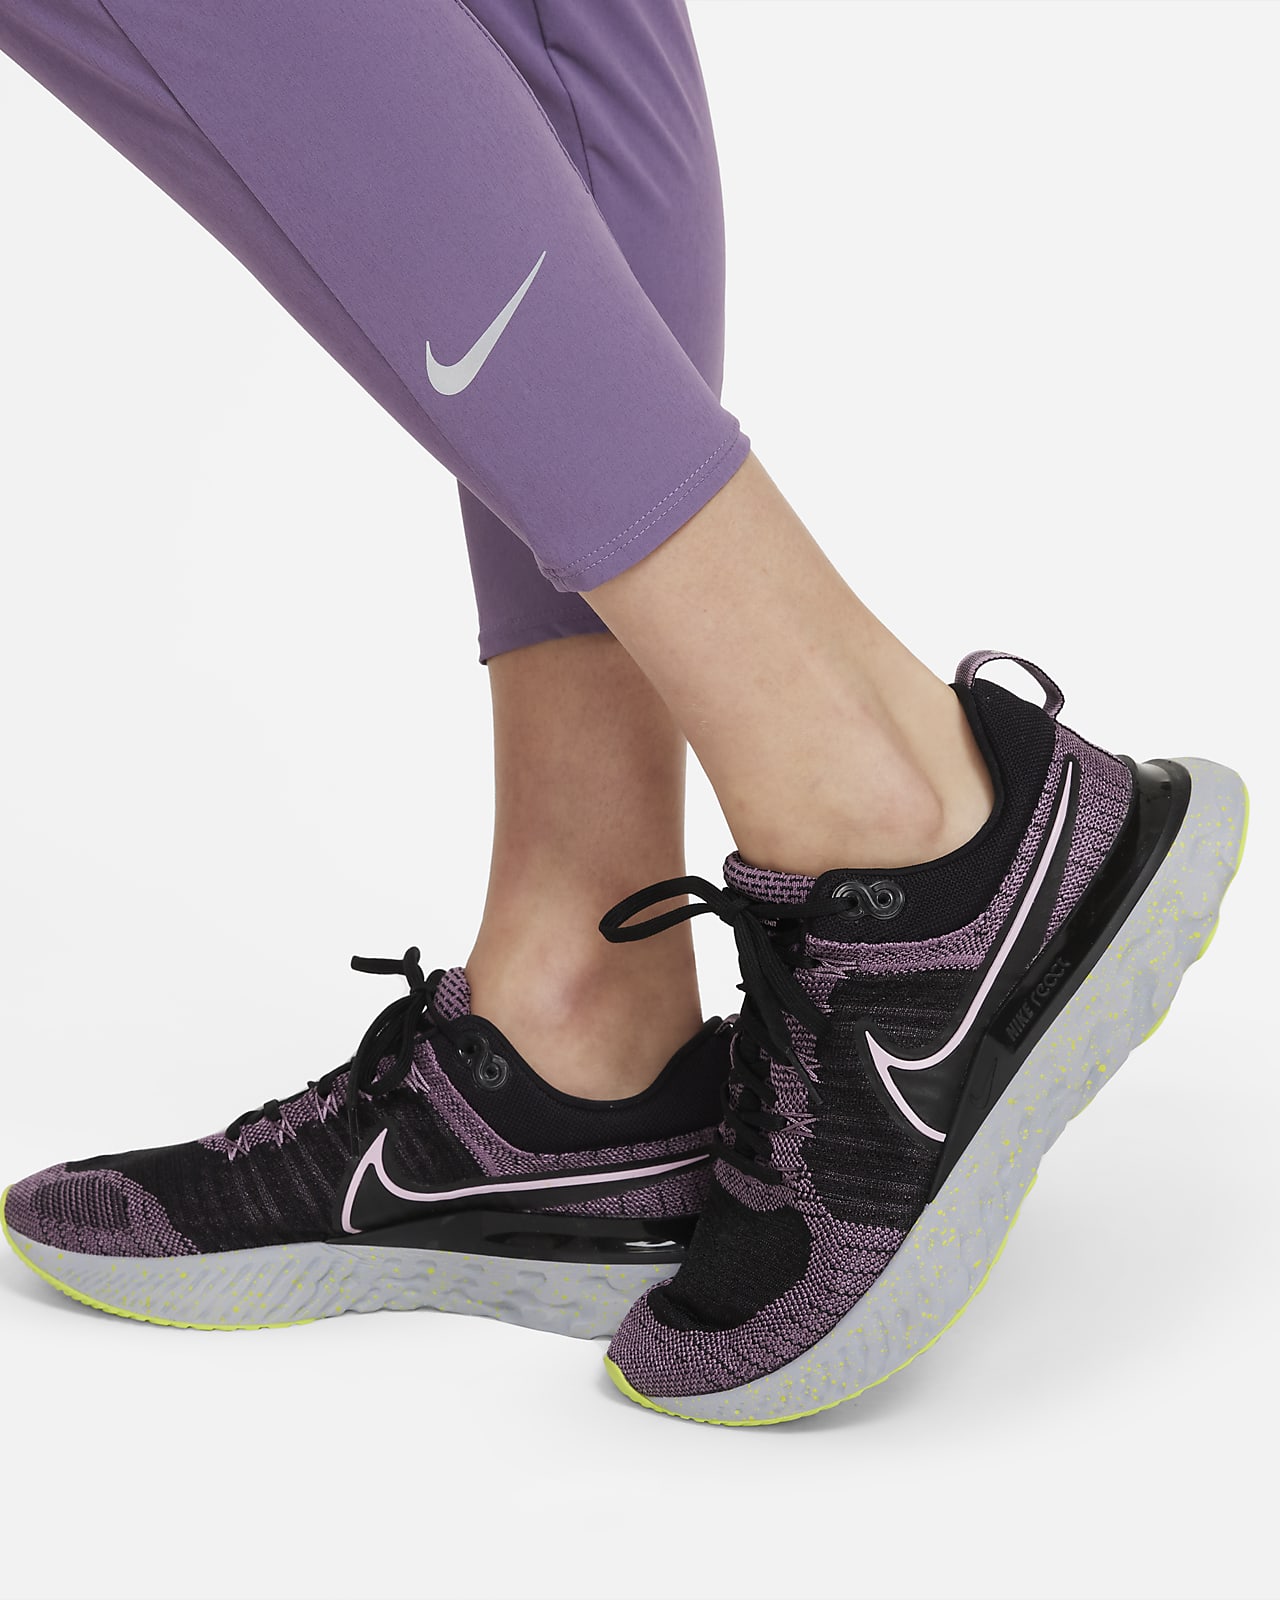 Nike Dri-FIT Essential Women's 7/8 Woven Running Pants